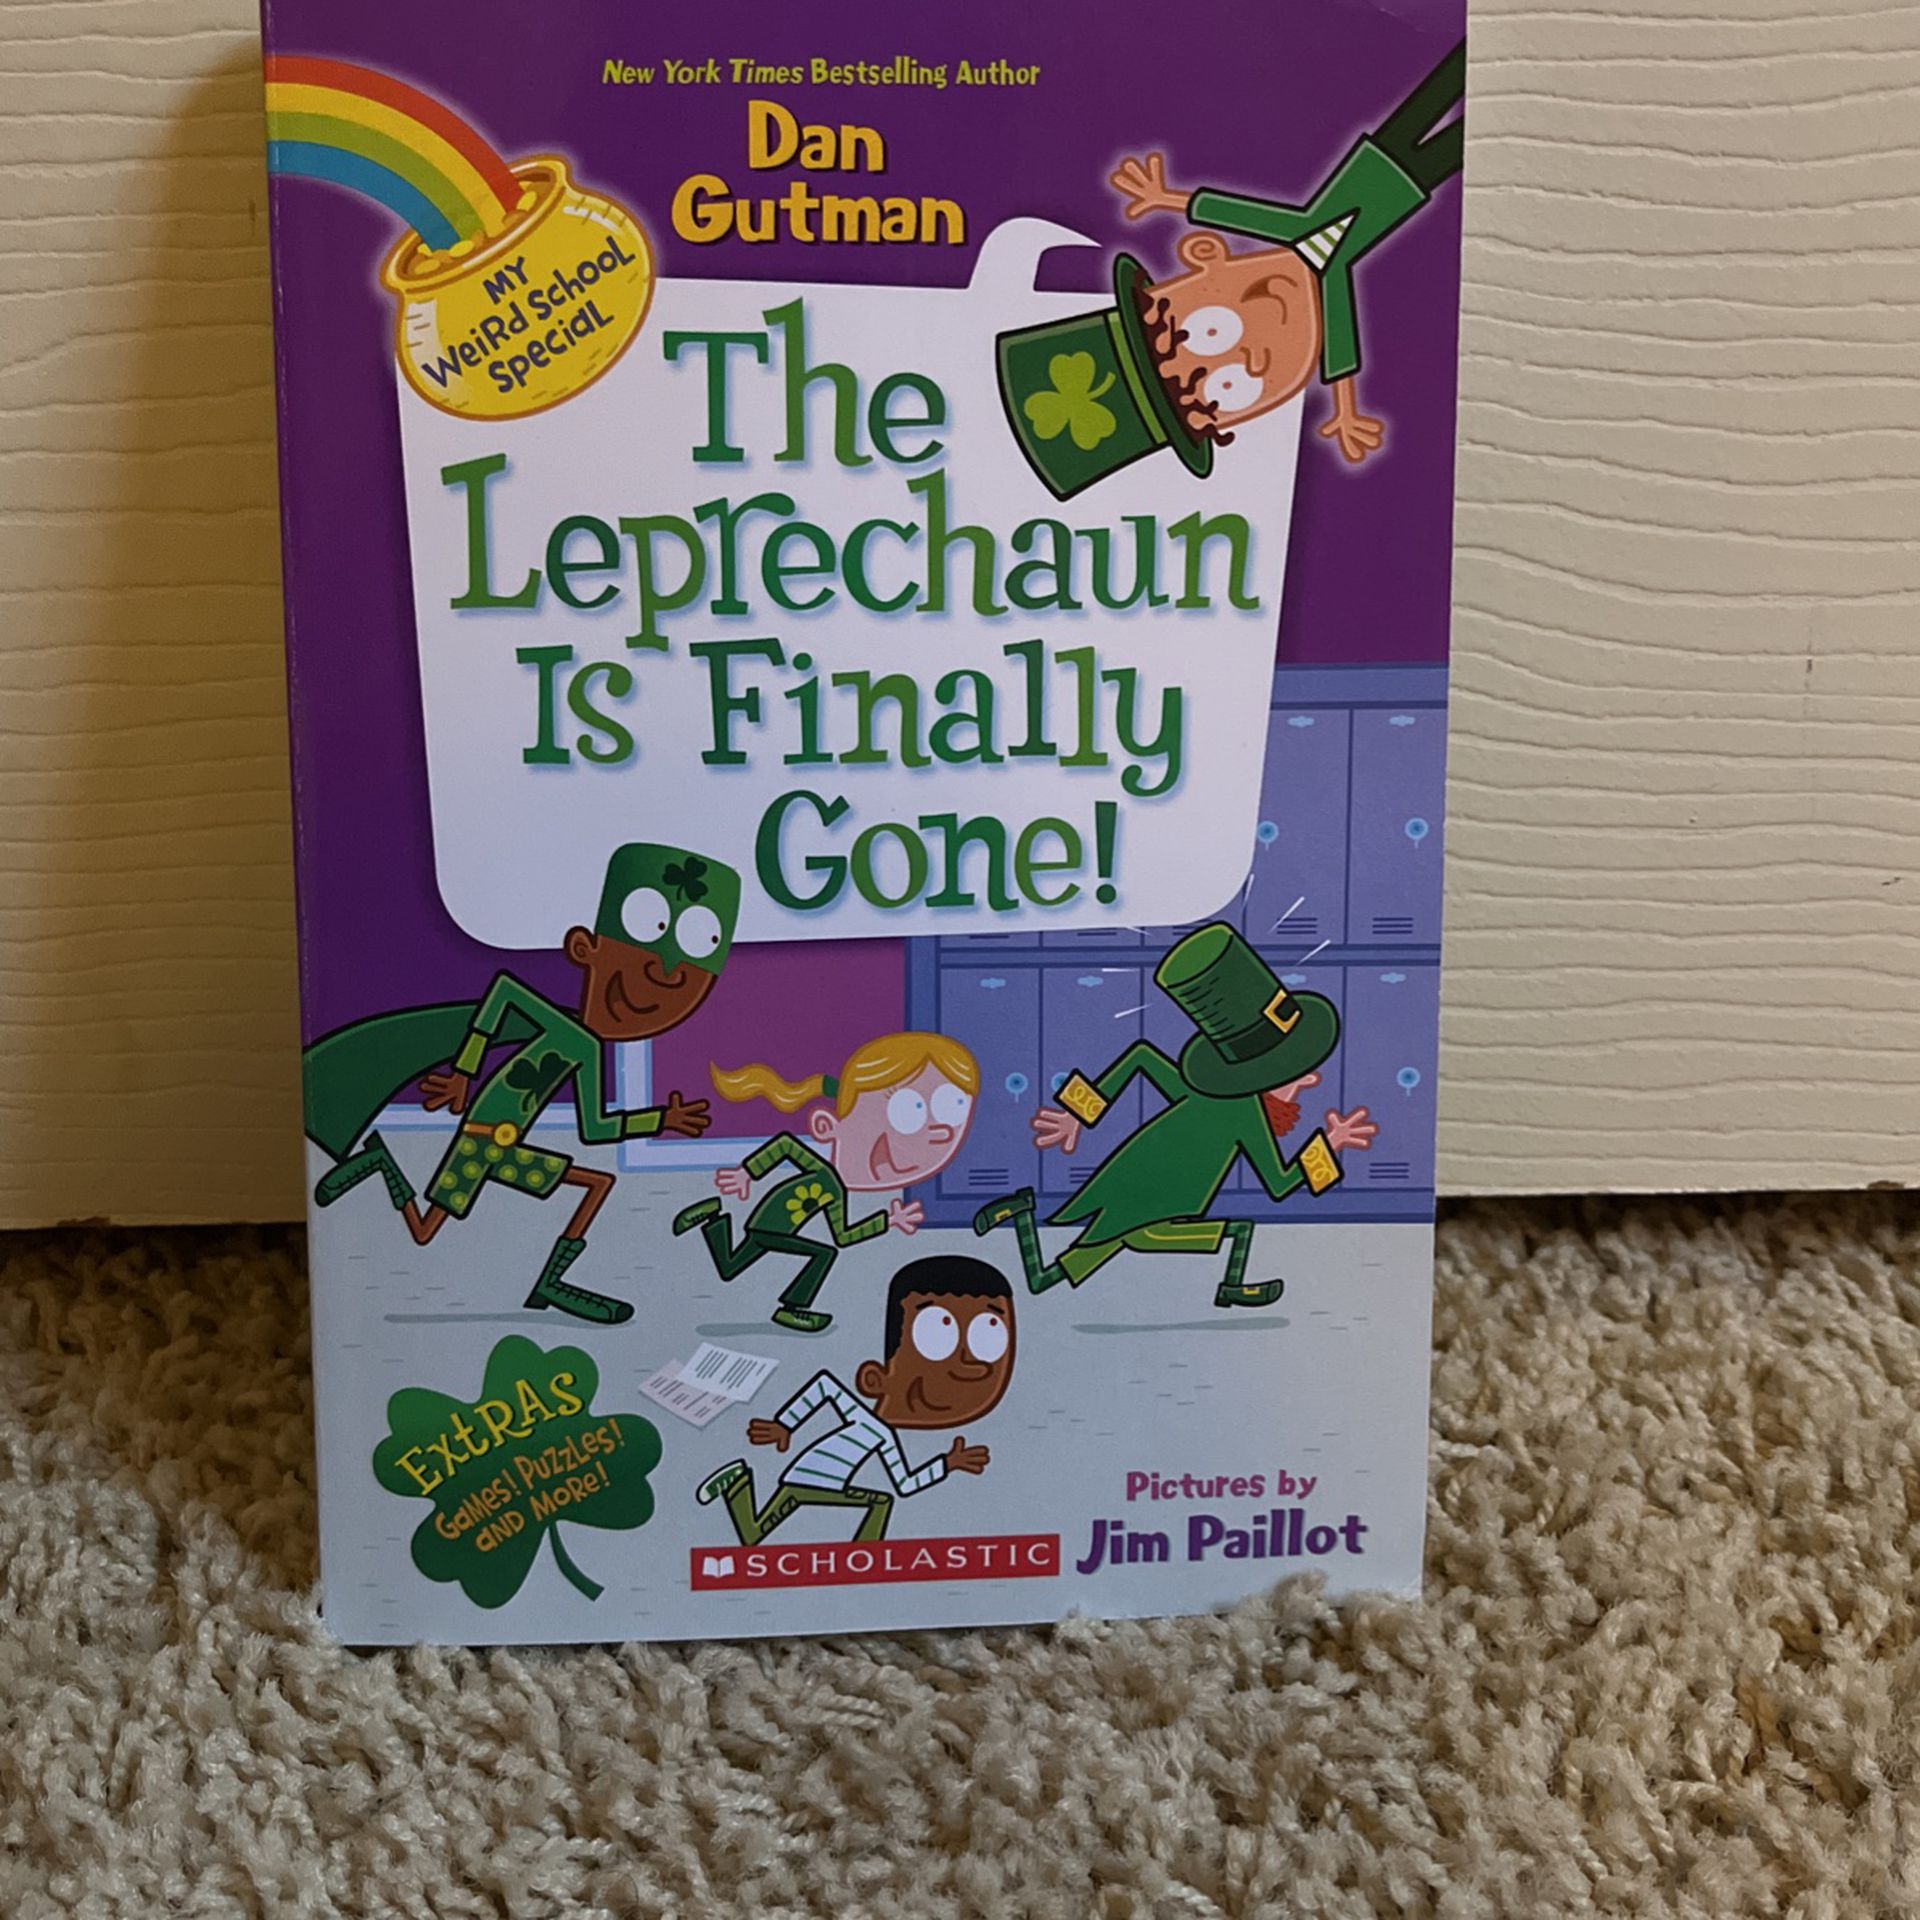 Dan Gutman  NEW “The Leprechaun Is Finally Gone!” Book